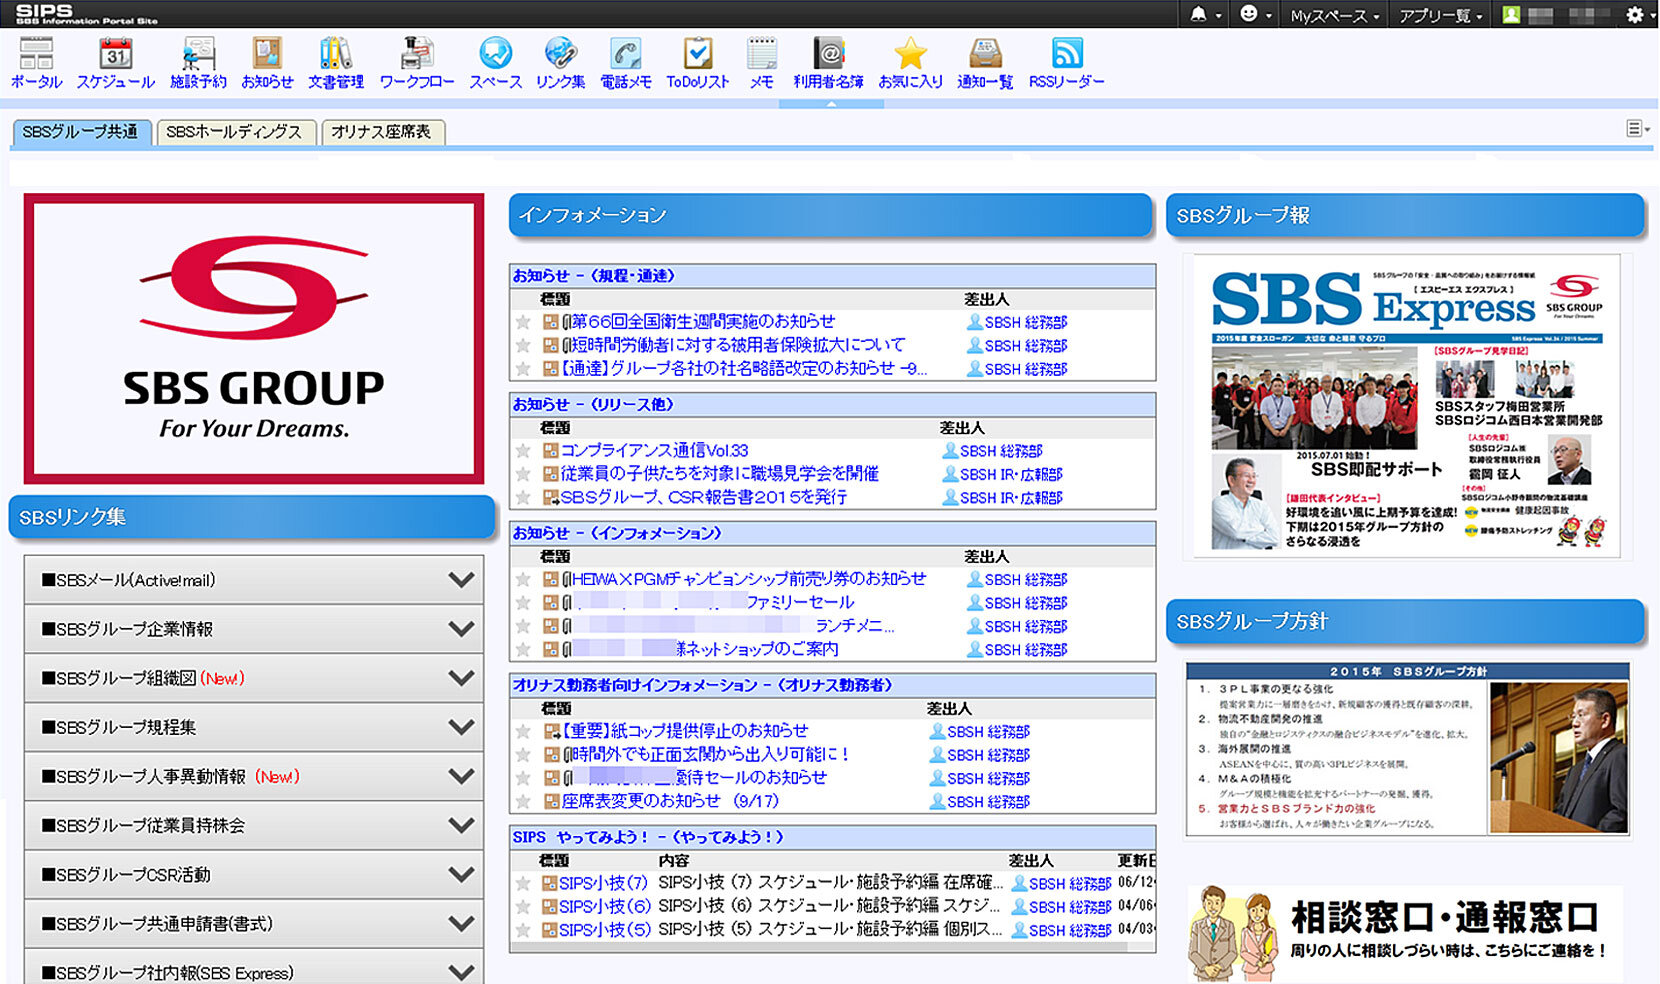 SBSグループの情報共有基盤となっている「SIPS(シップス)」のトップ画面